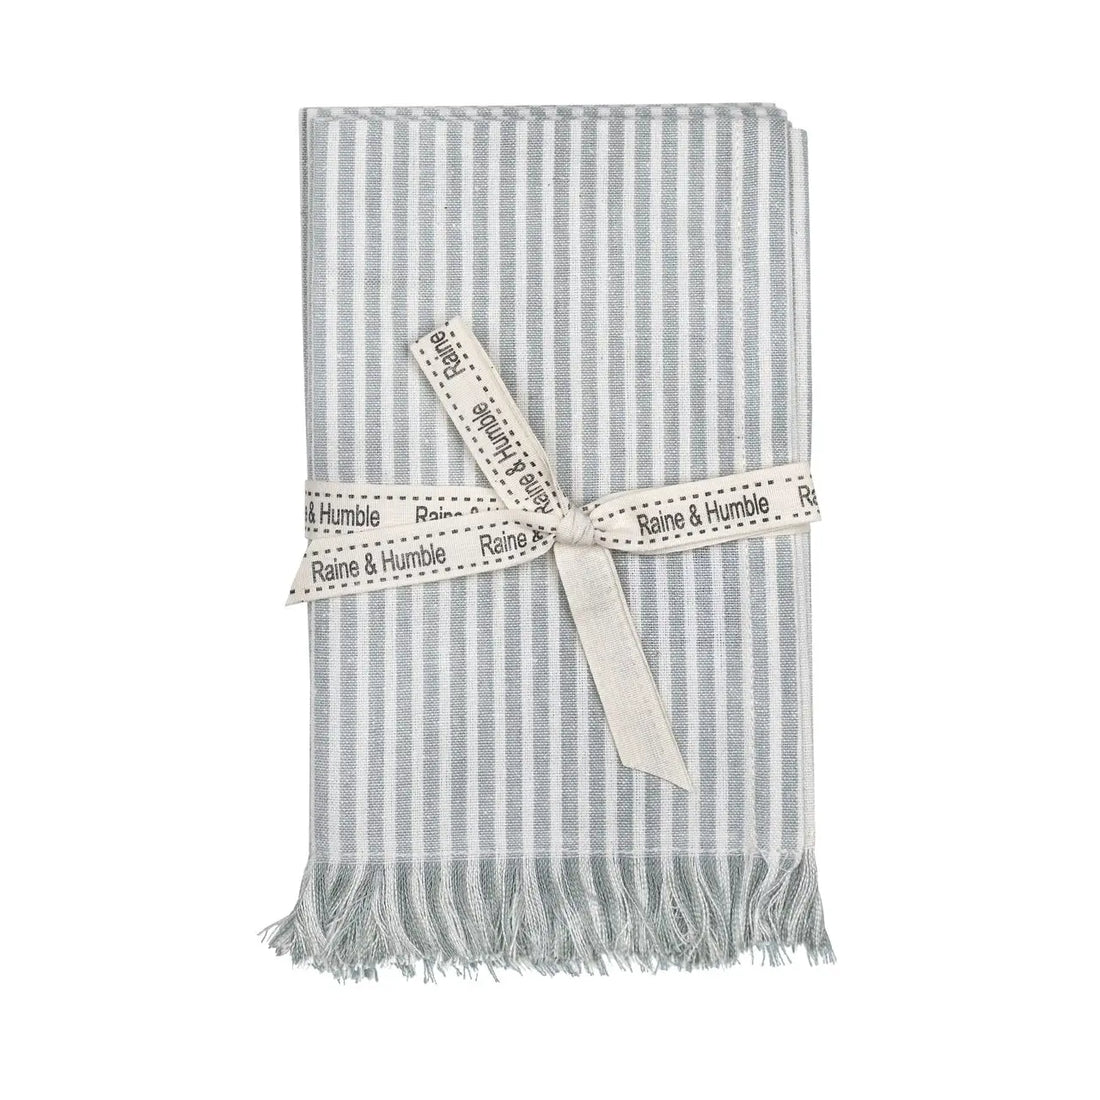 Recycled Cotton Stripe Cloth Napkins - Set of 4